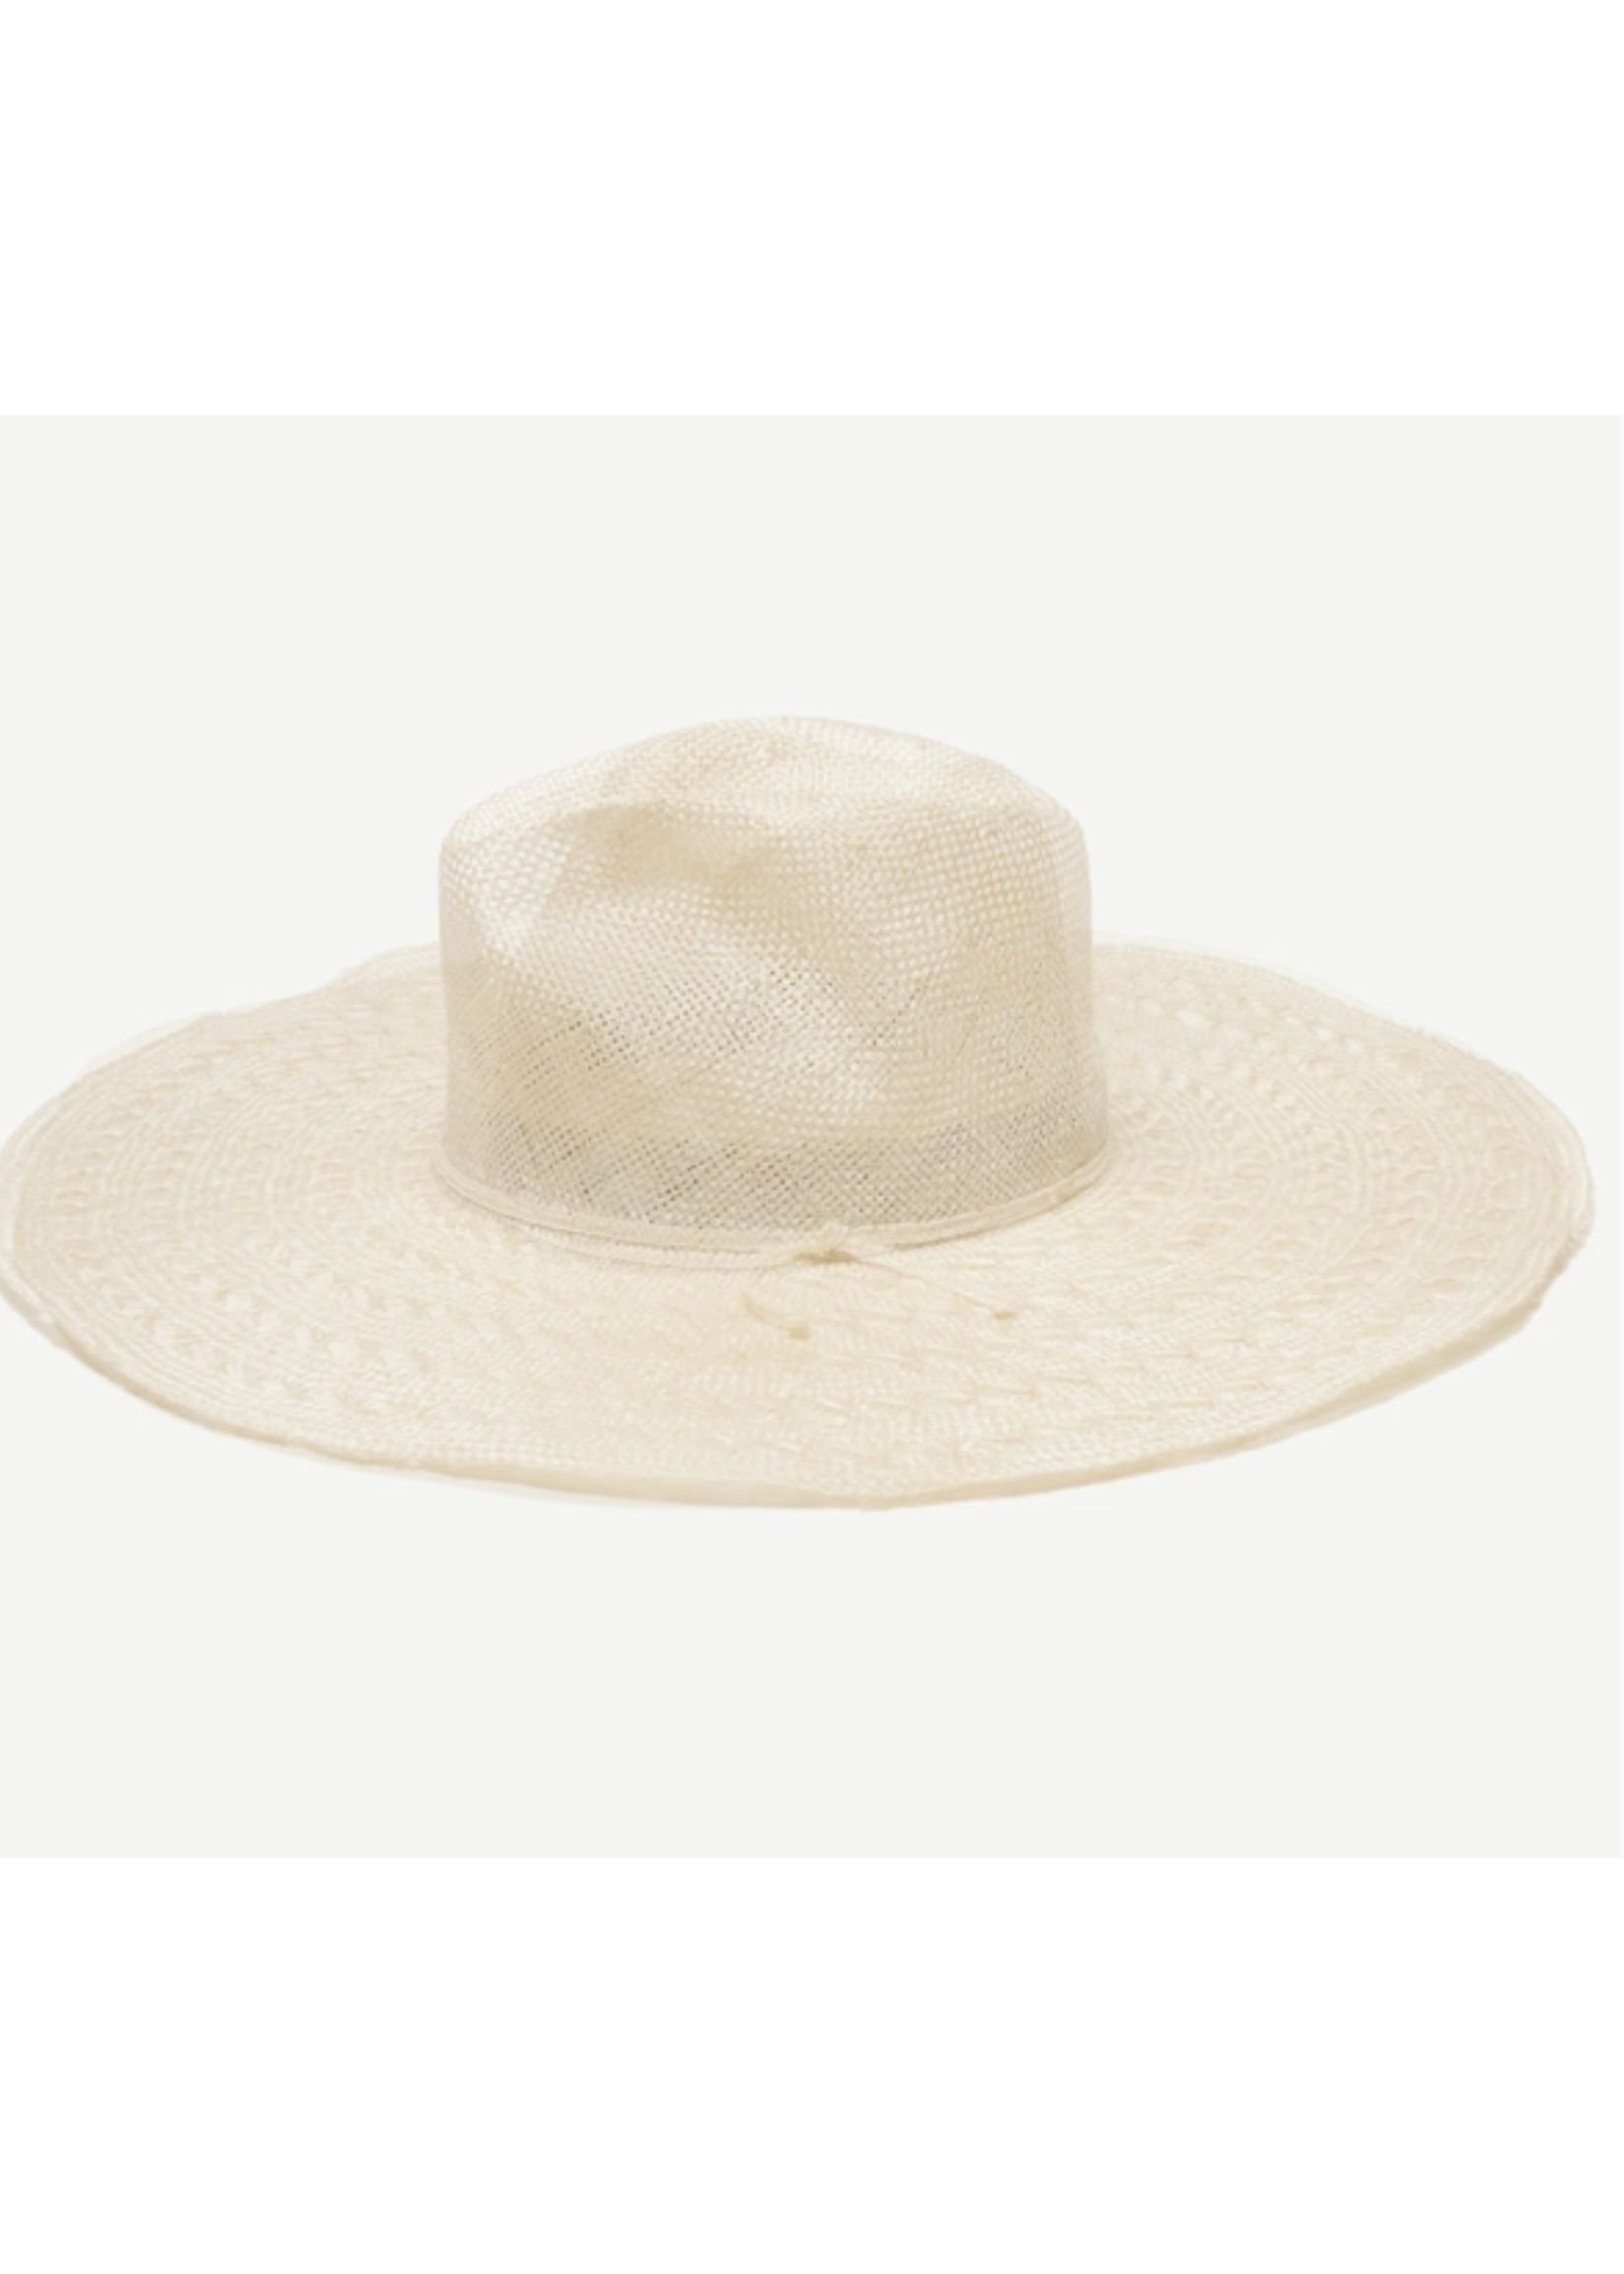 WYETH Merrick Hat